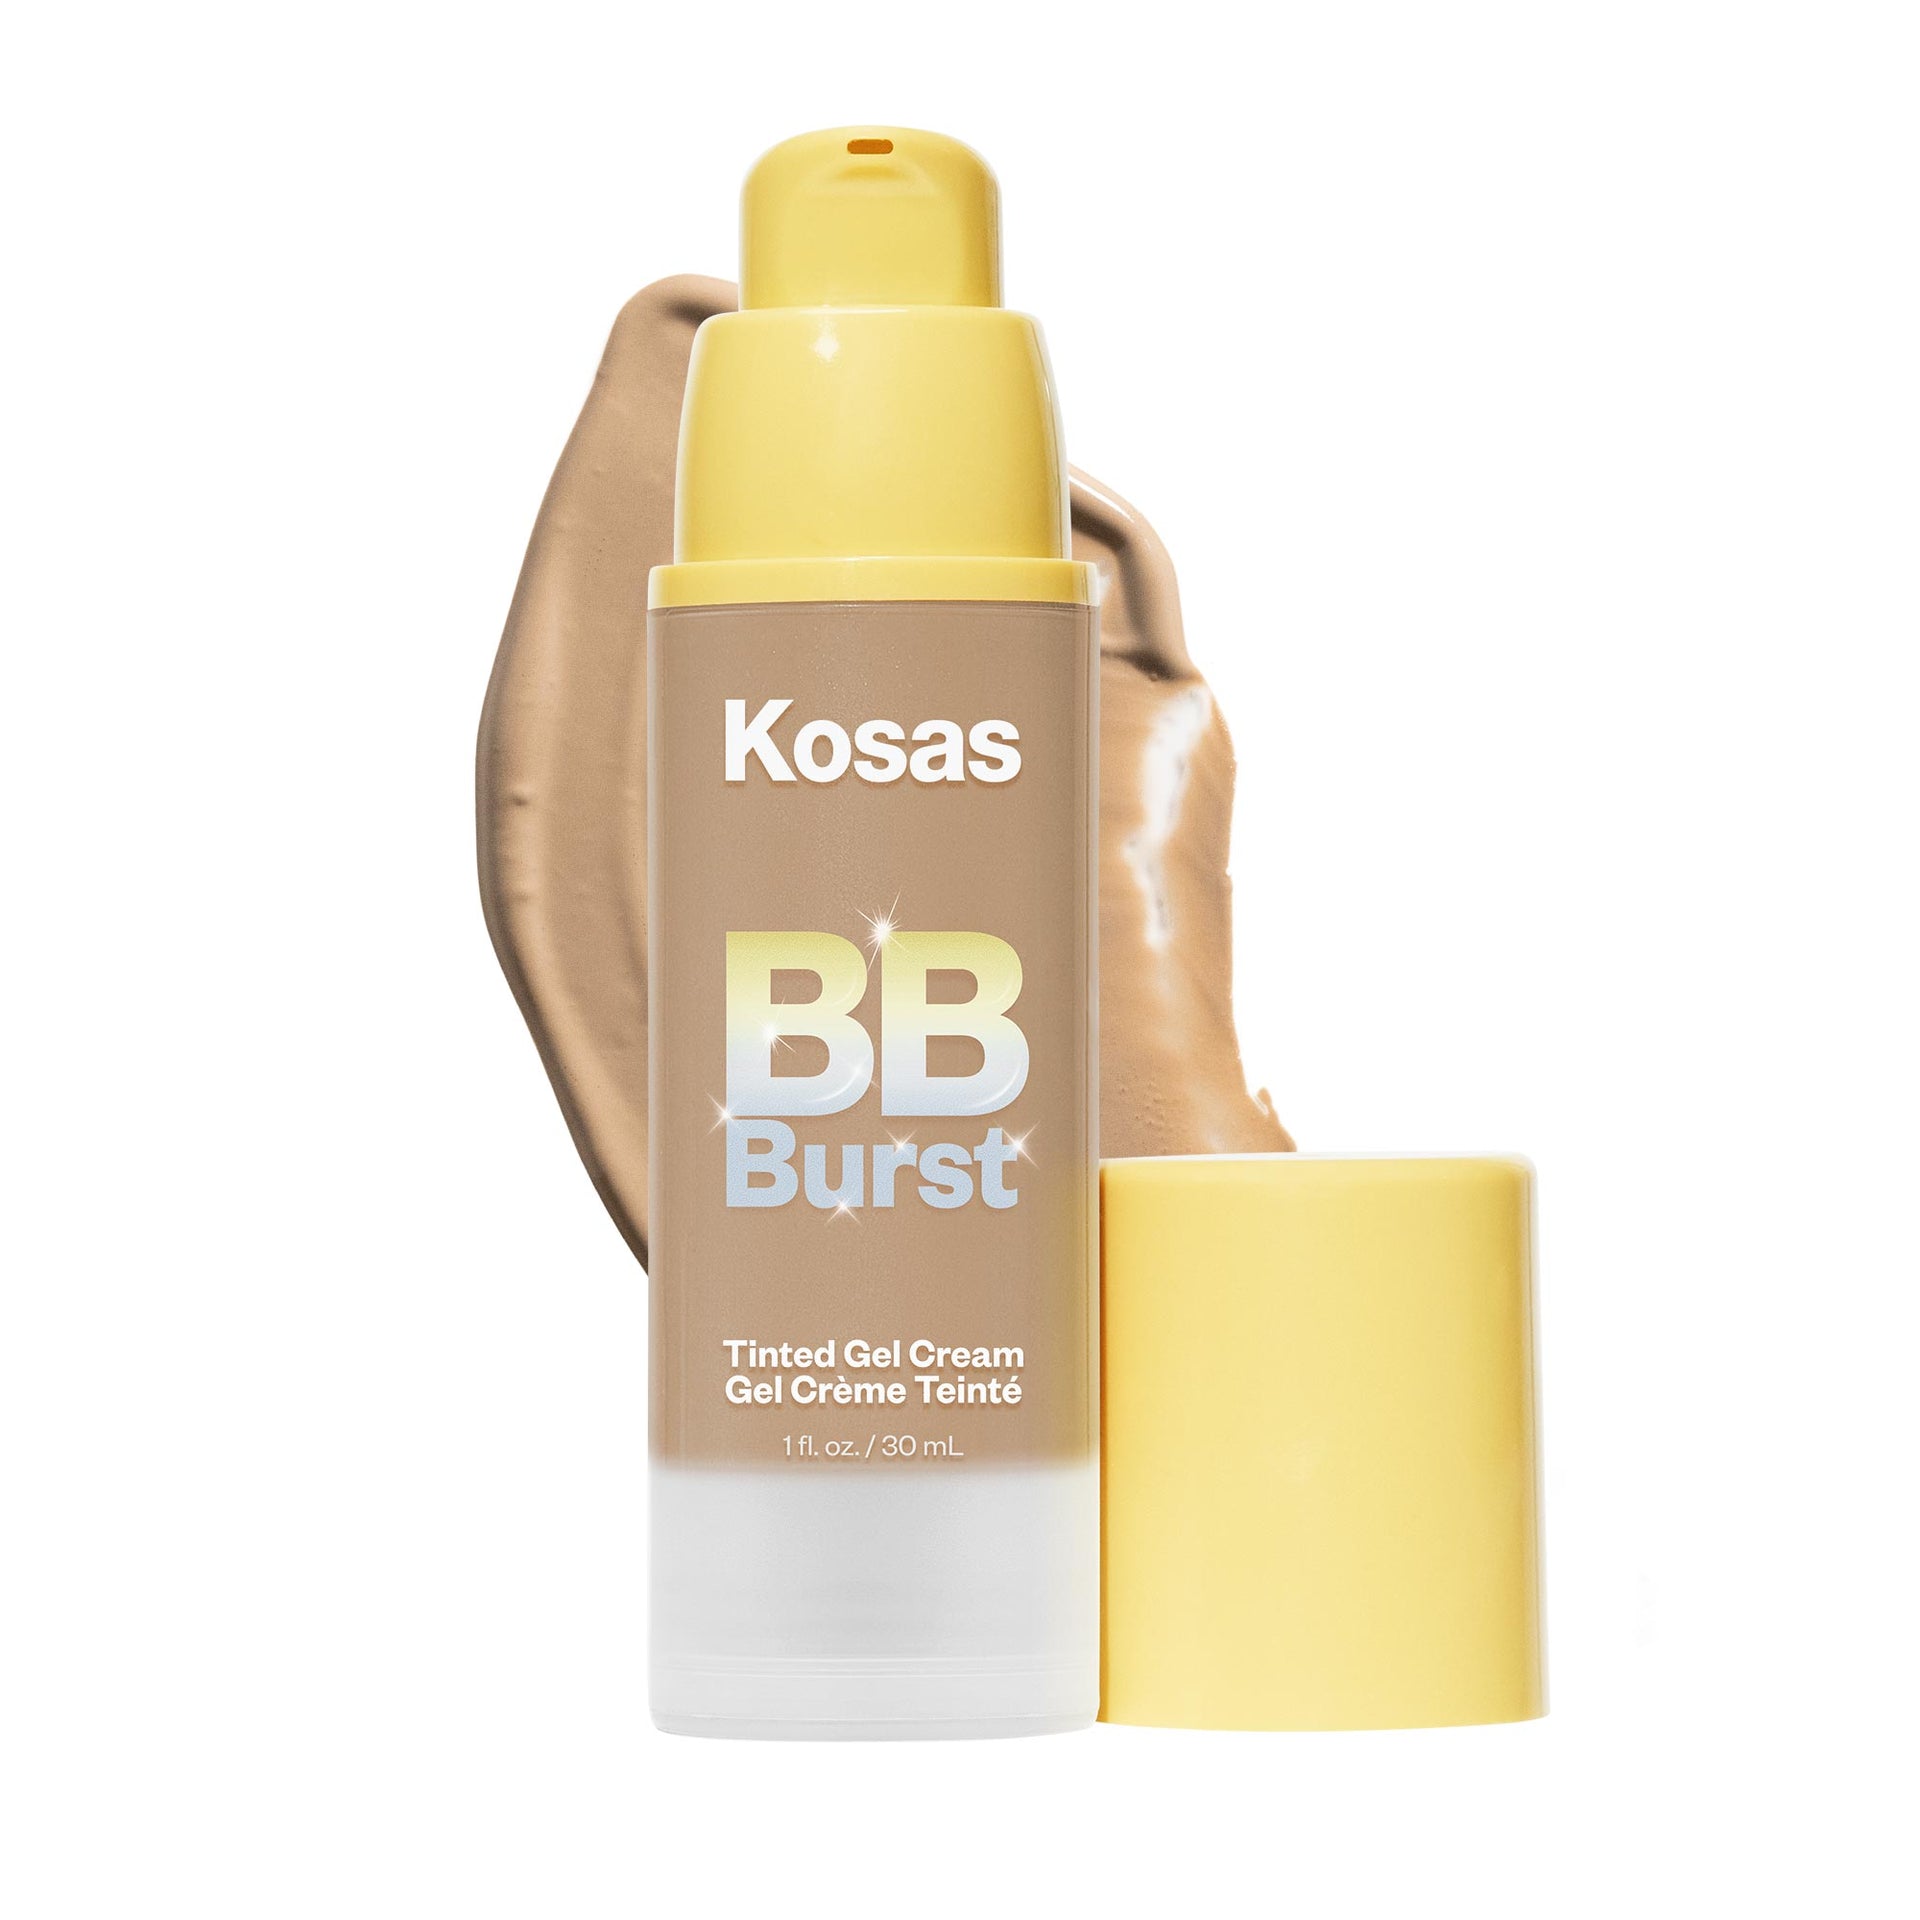 Kosas BB Burst in the shade Medium Deep Neutral Olive 31